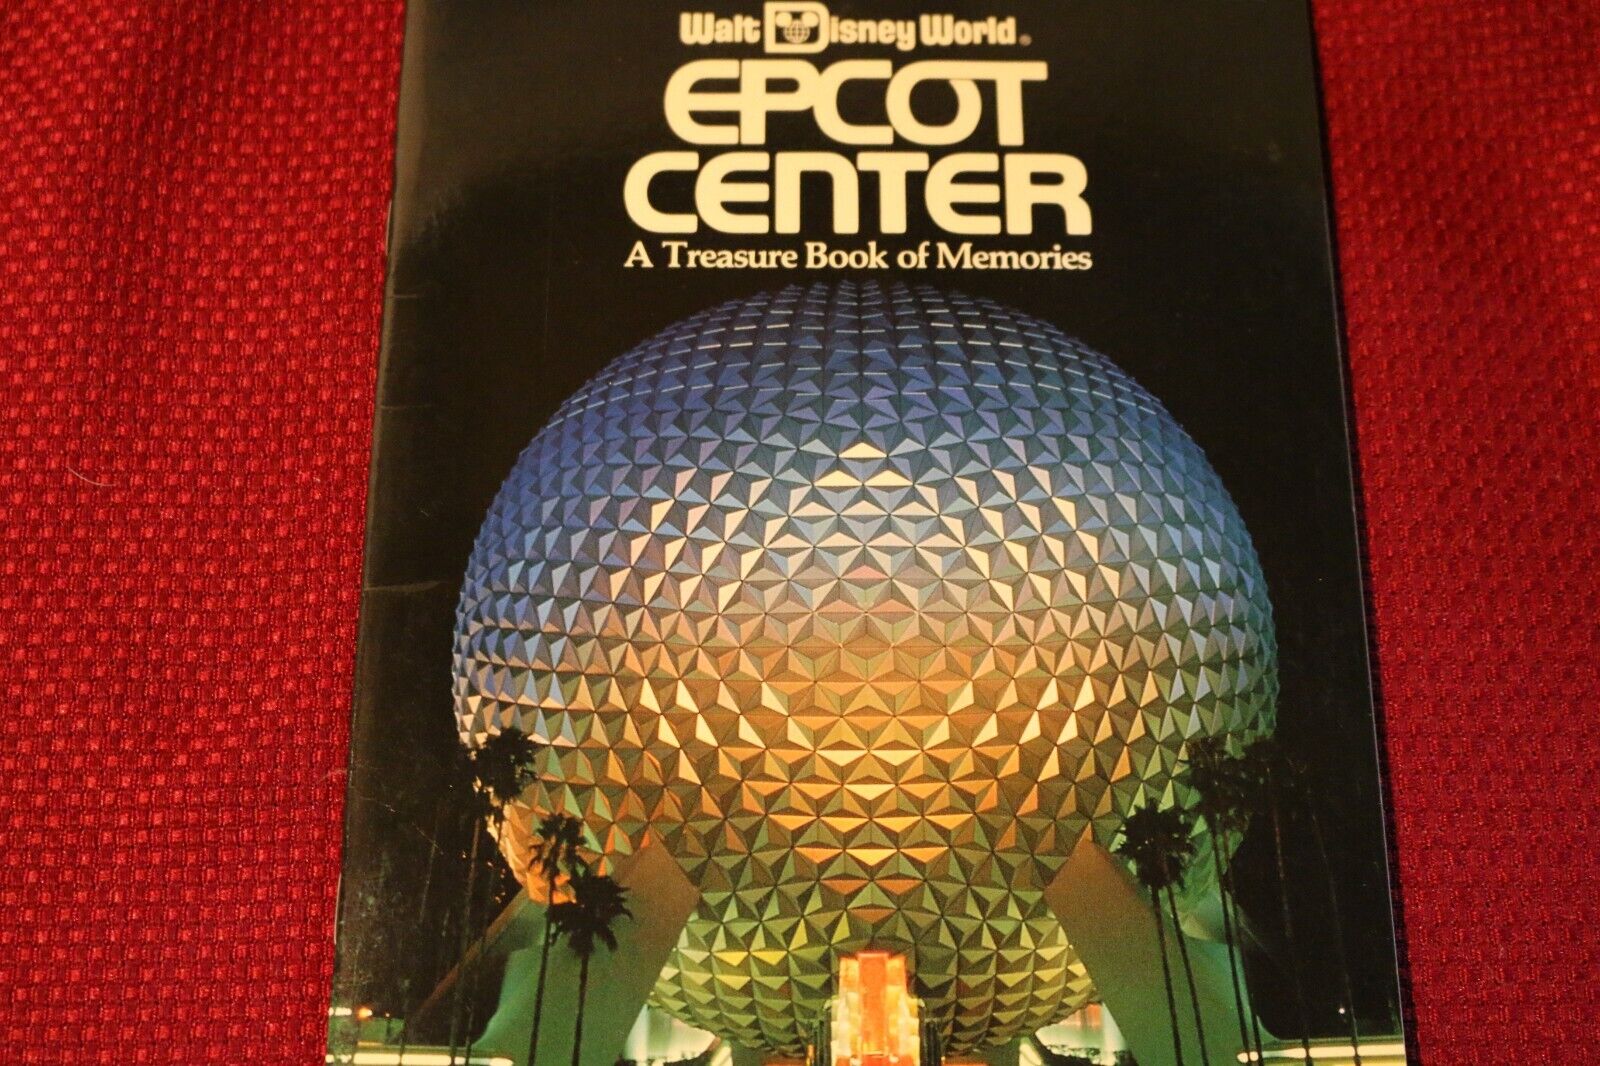 Walt Disney World Epcot Center A Treasure Book of Memories 1989 